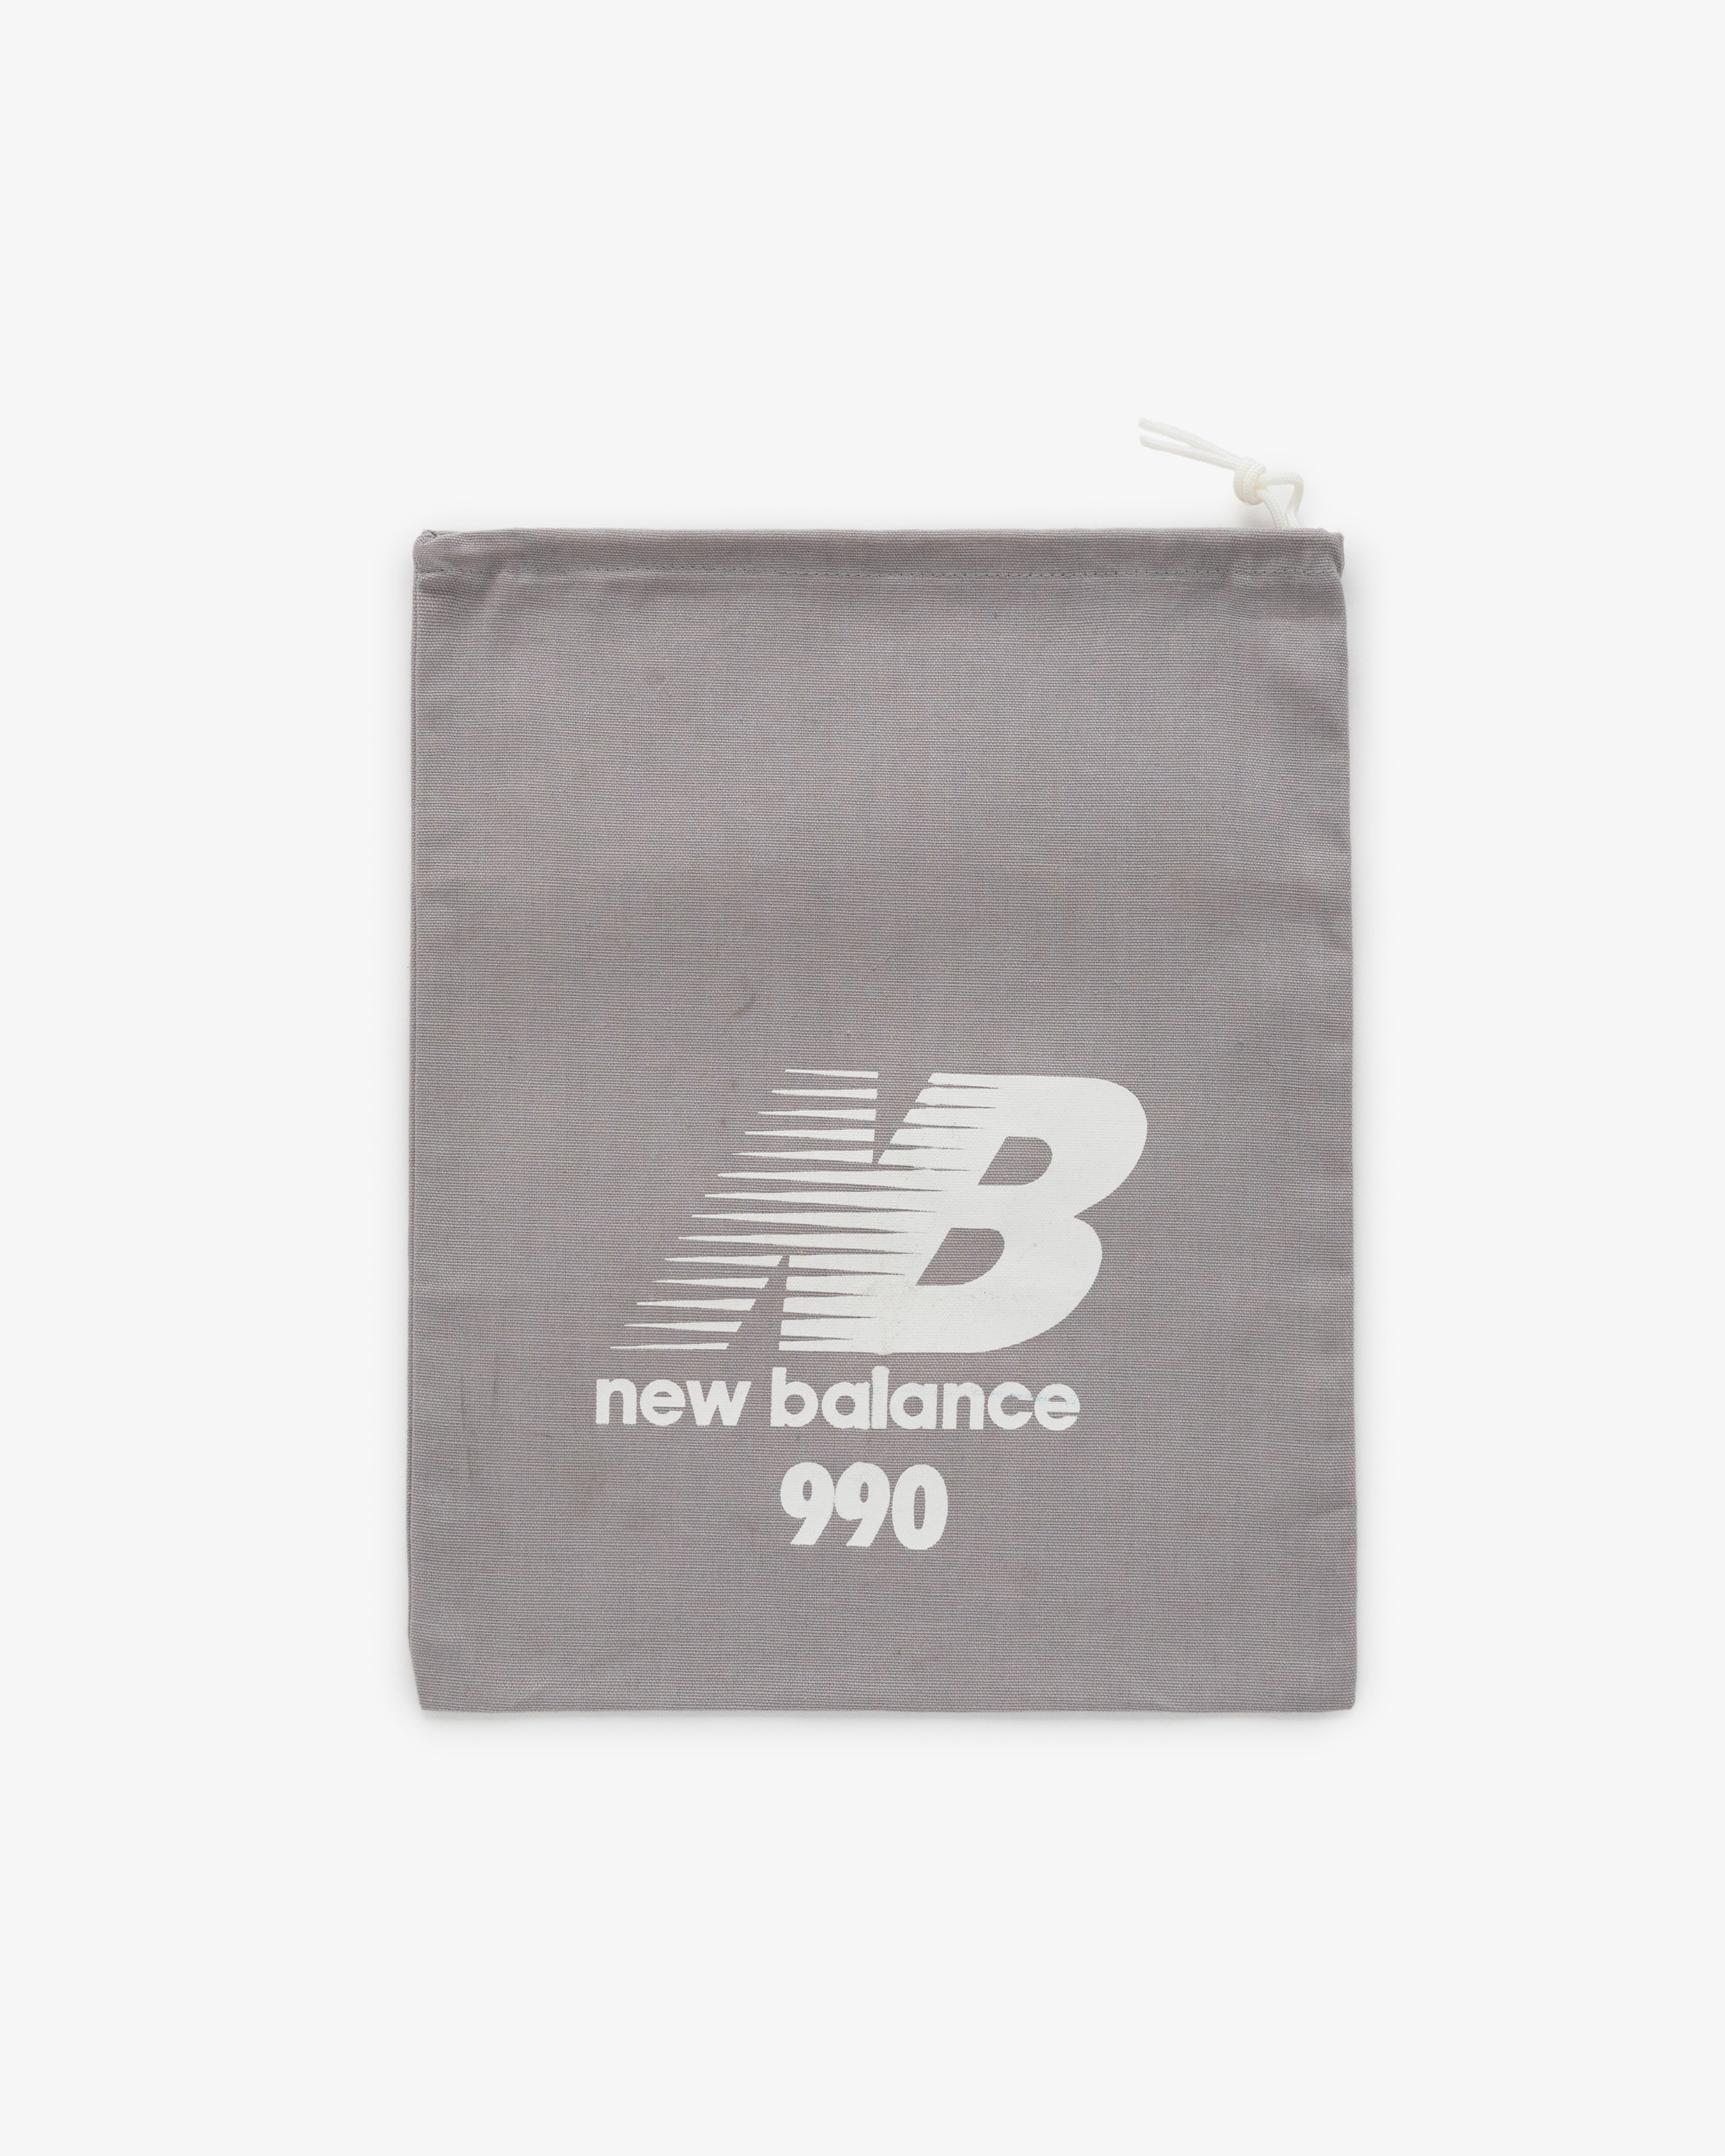 Original New Balance 990